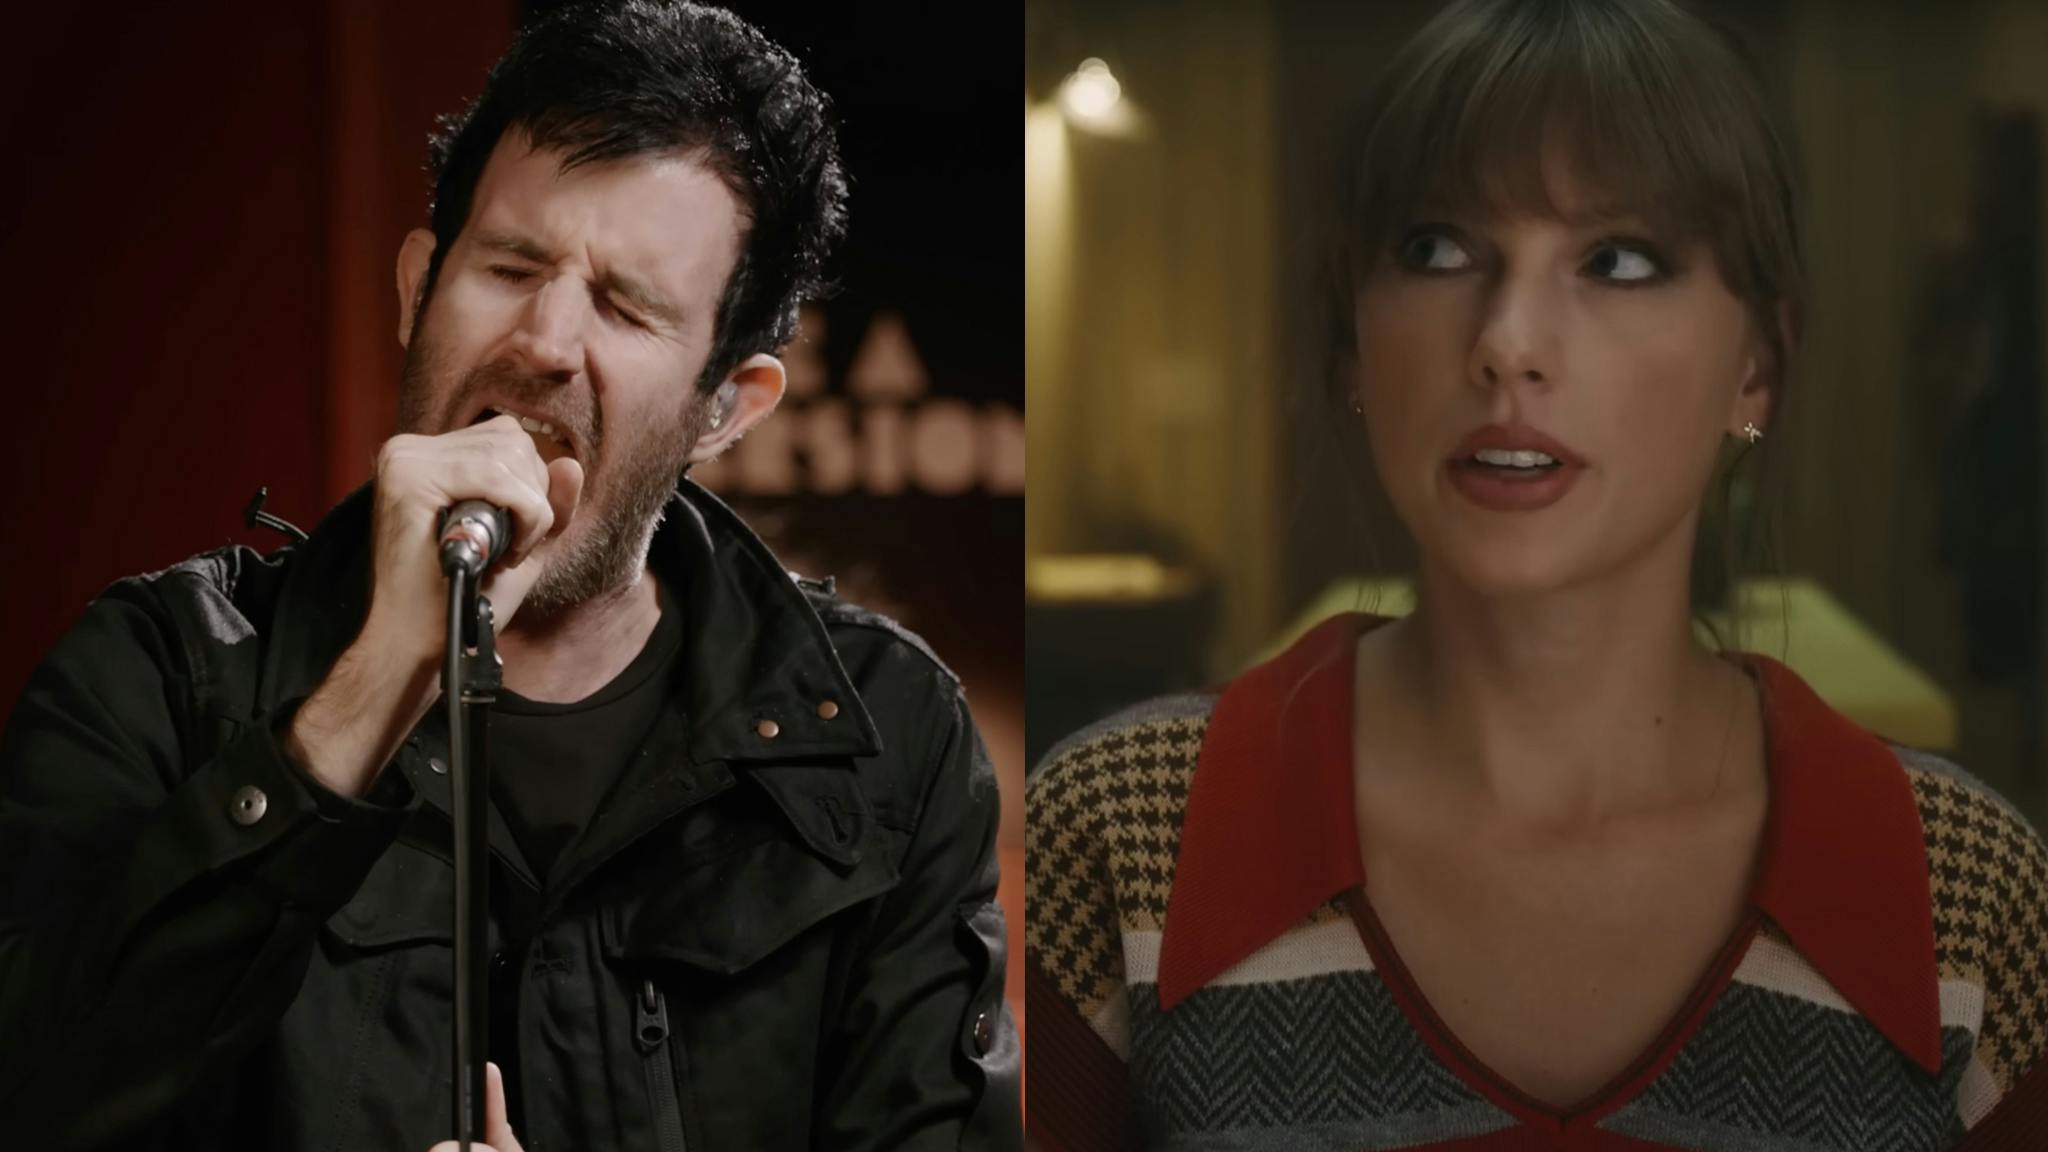 Watch: Pendulum have covered Taylor Swift’s Anti-Hero